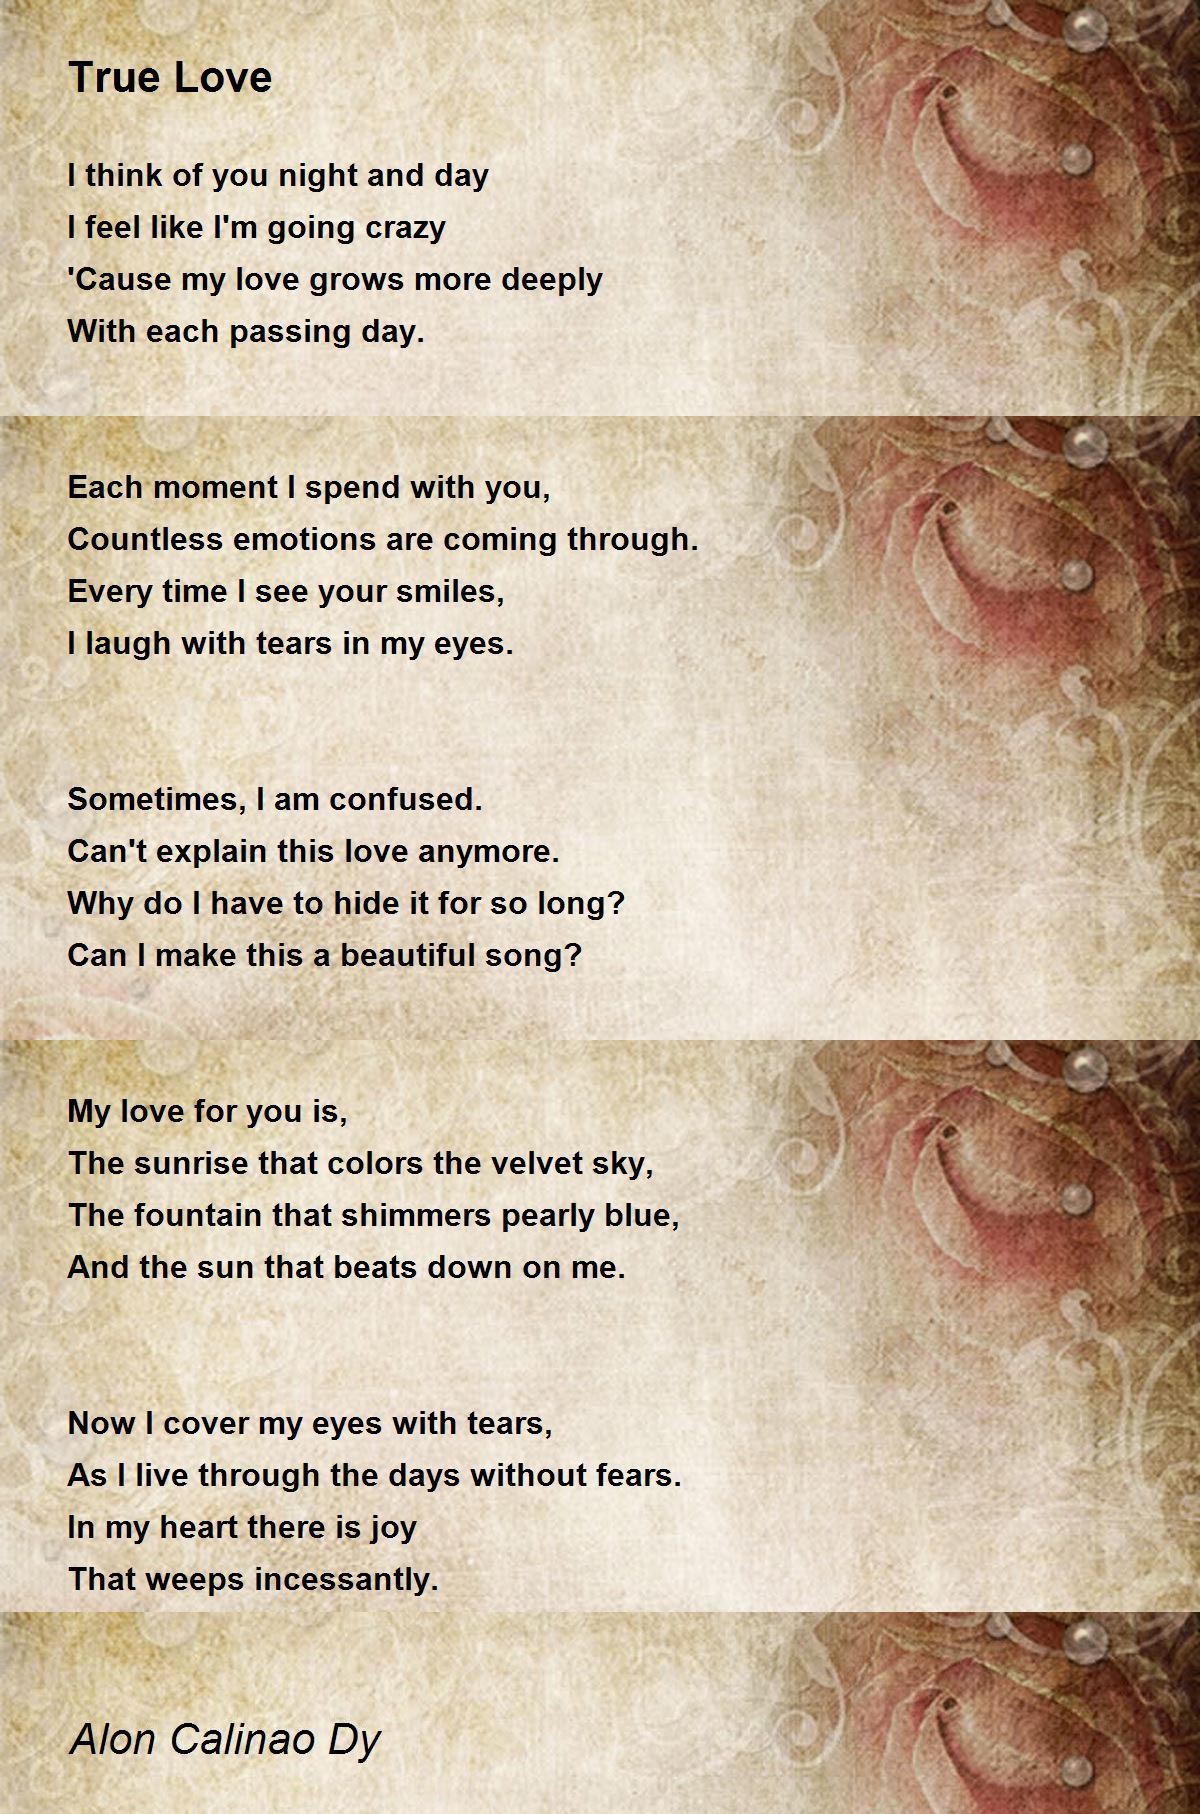 True Love - True Love Poem by Alon Calinao Dy